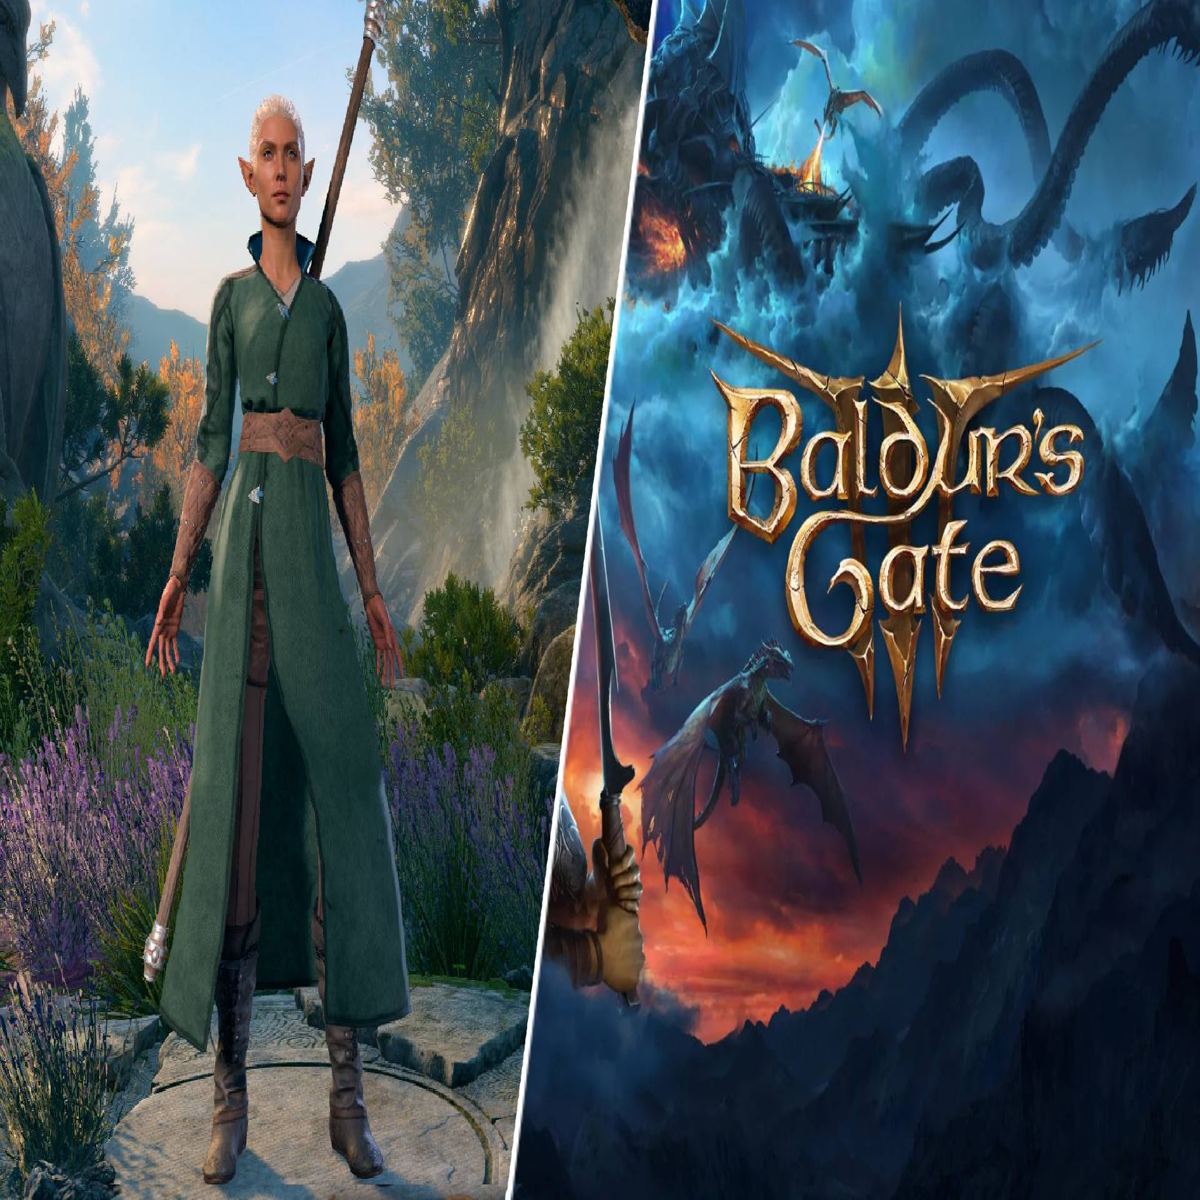 Best Baldur's Gate 3 Wizard build: Race, skills, subclass